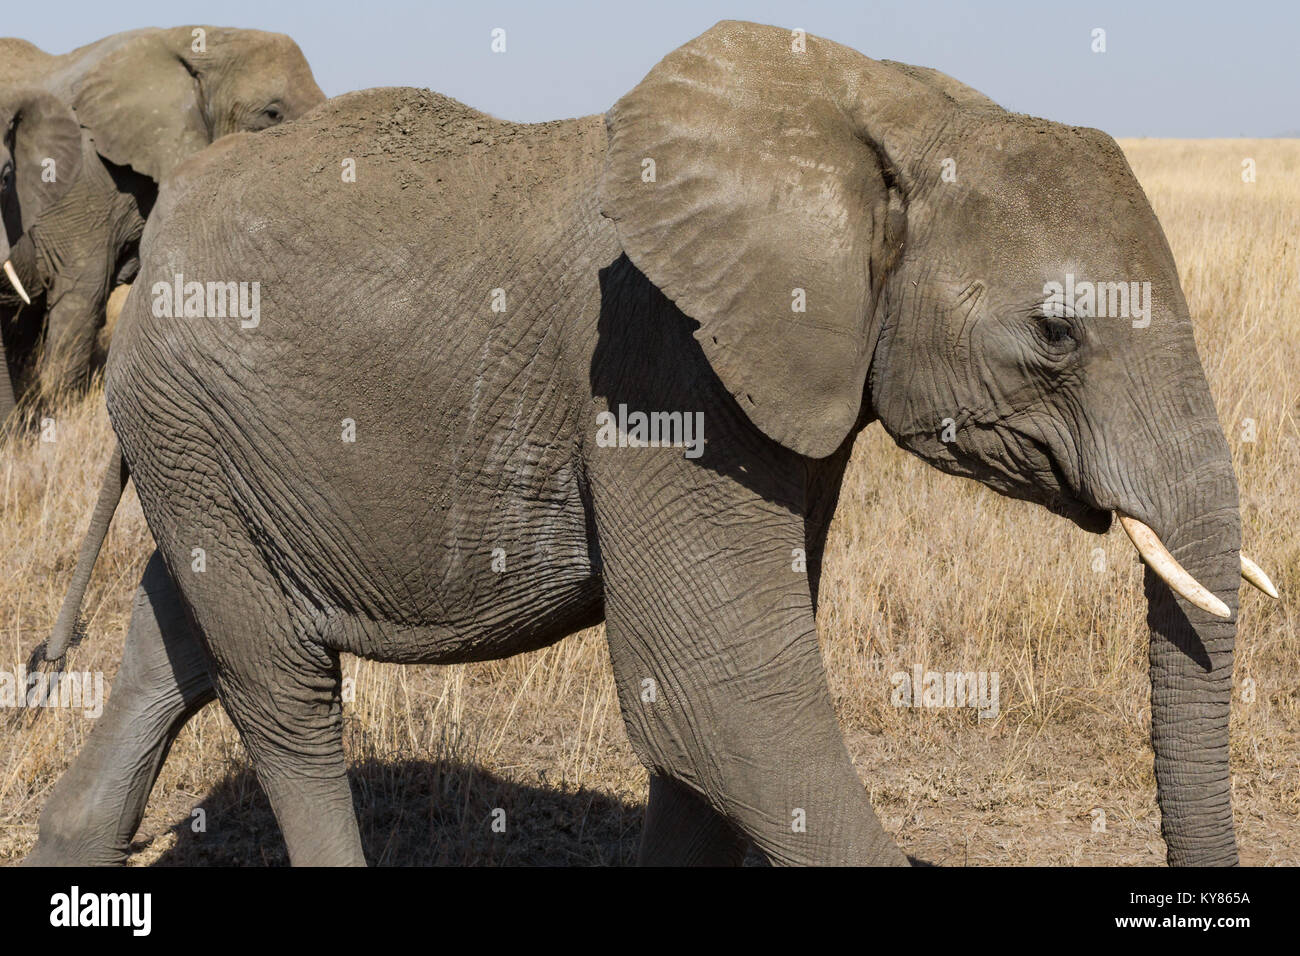 Marching elephant profile portrait, savanna grass, October 2017, Serengeti National Park, Tanzania, Africa Stock Photo